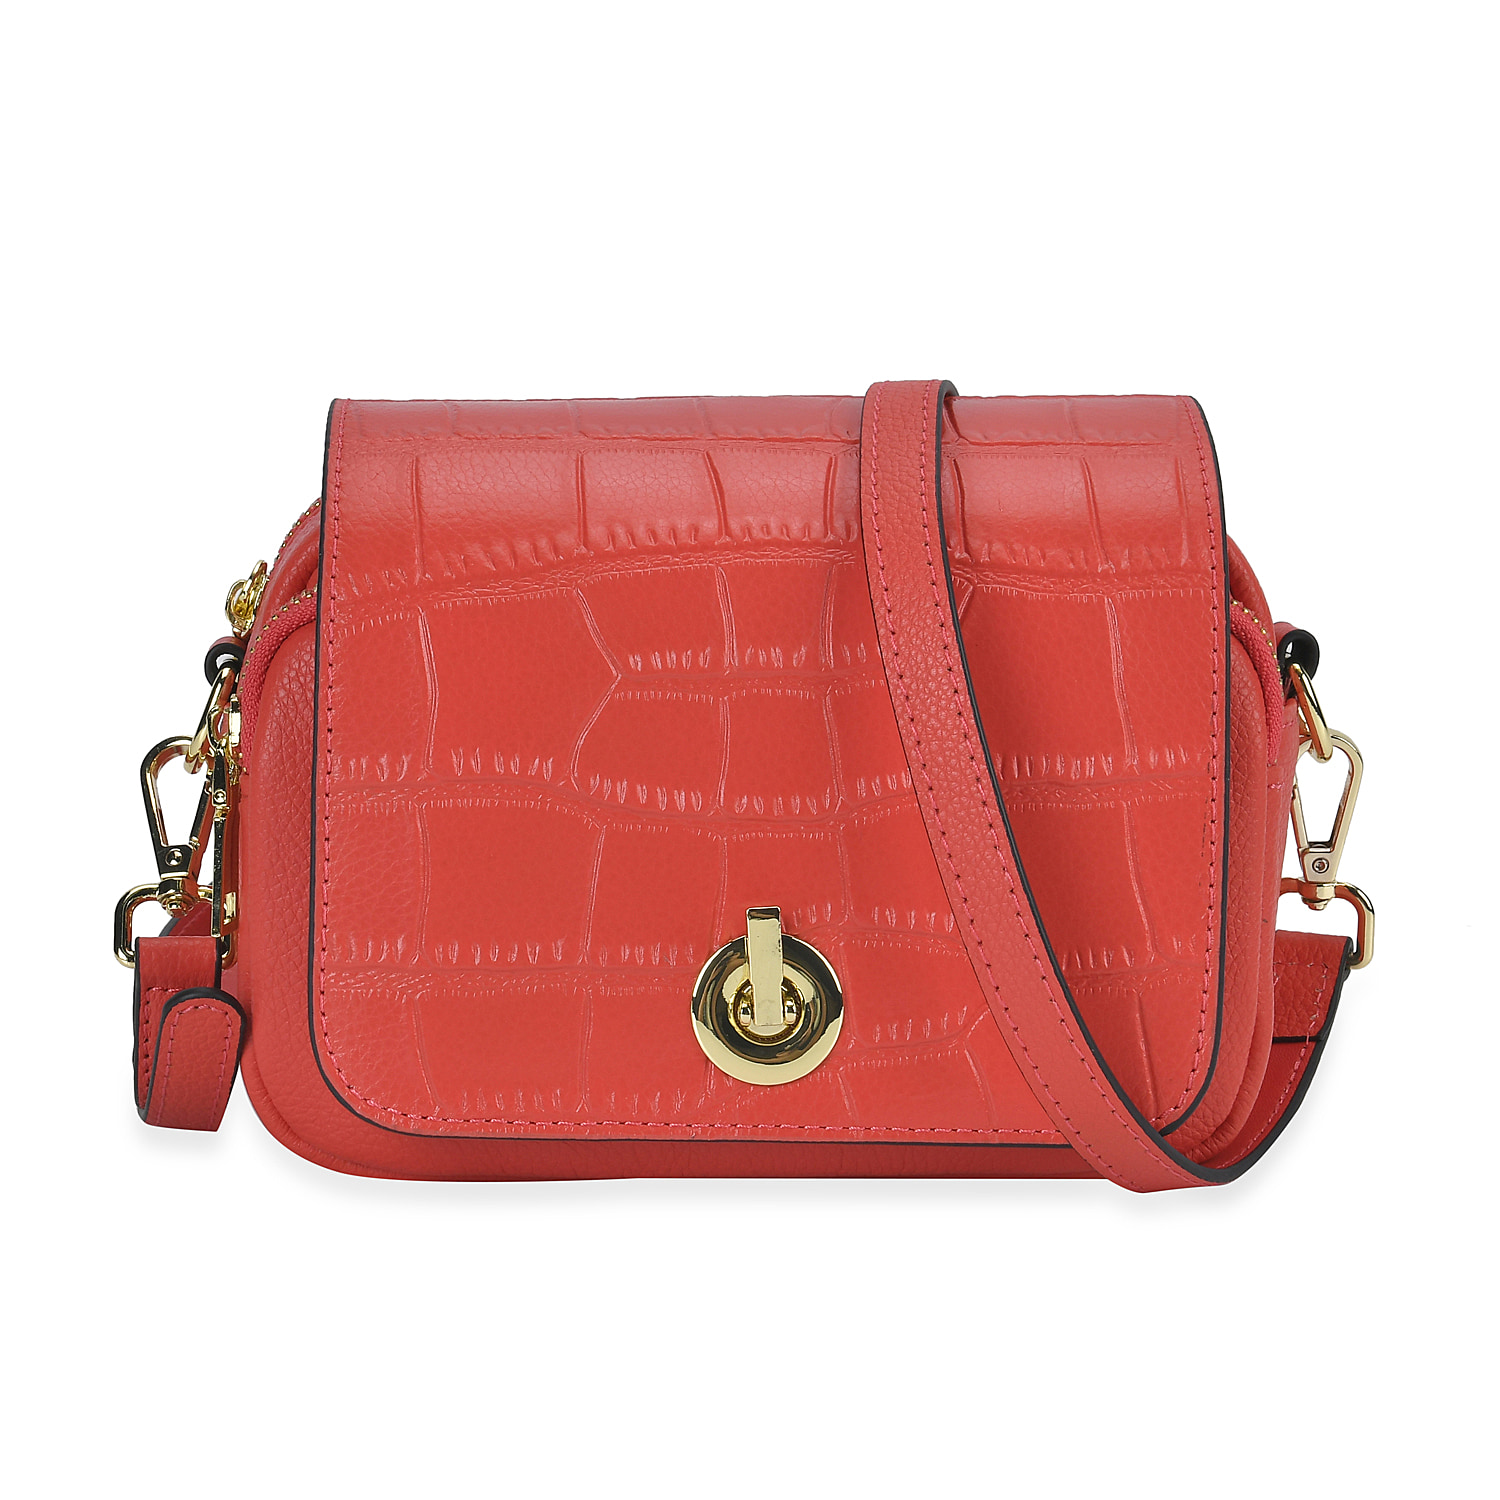 Genuine-Leather-Croc-Emobossed-Crossbody-Bag-Size-19x7x14-cm-Red-Black